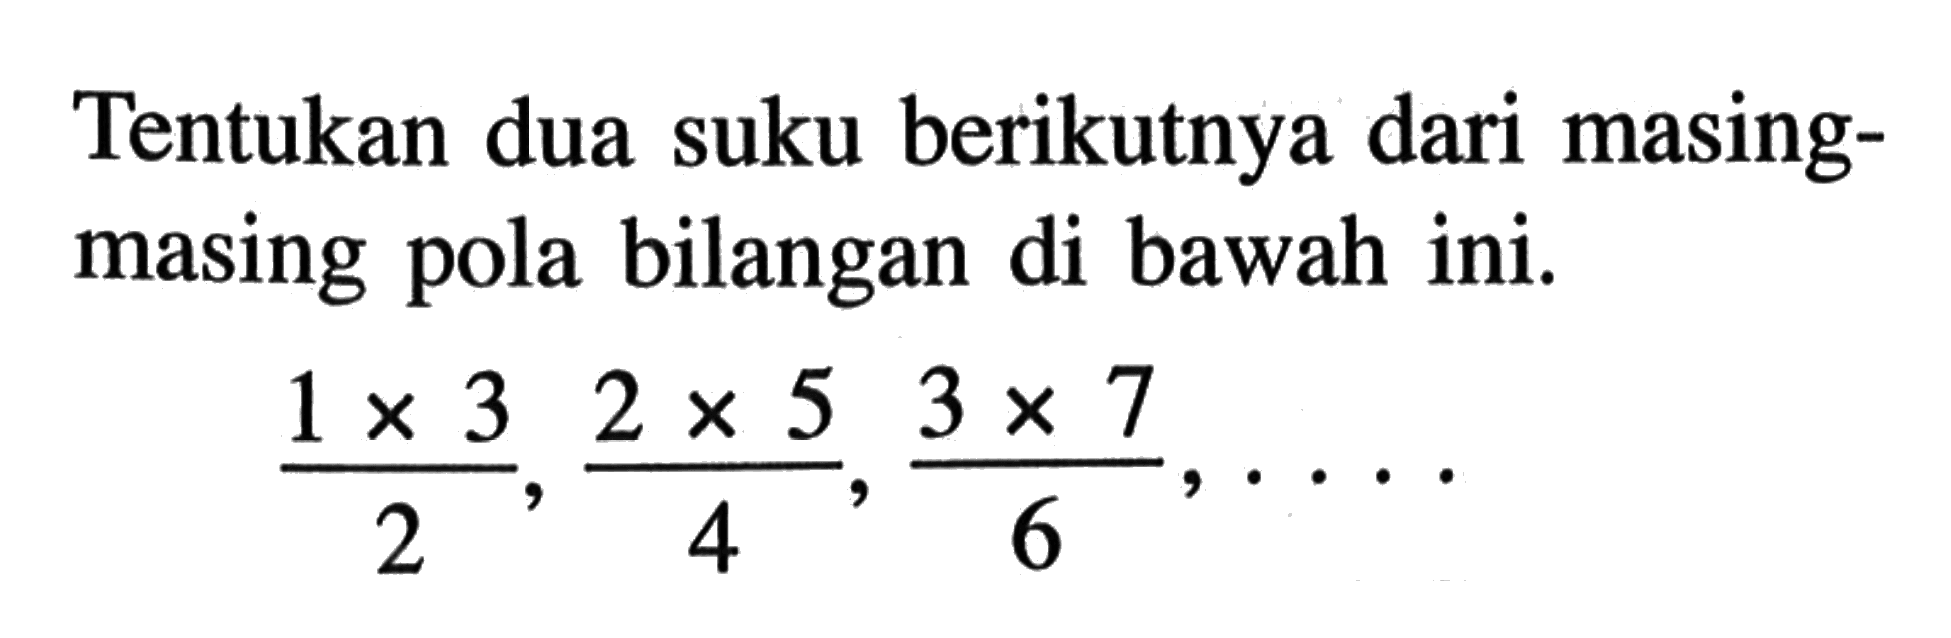 Tentukan dua suku berikutnya dari masing-masing pola bilangan di bawah ini. (1 x 3)/2, (2 x 5)/4, (3 x 7)/6, ....